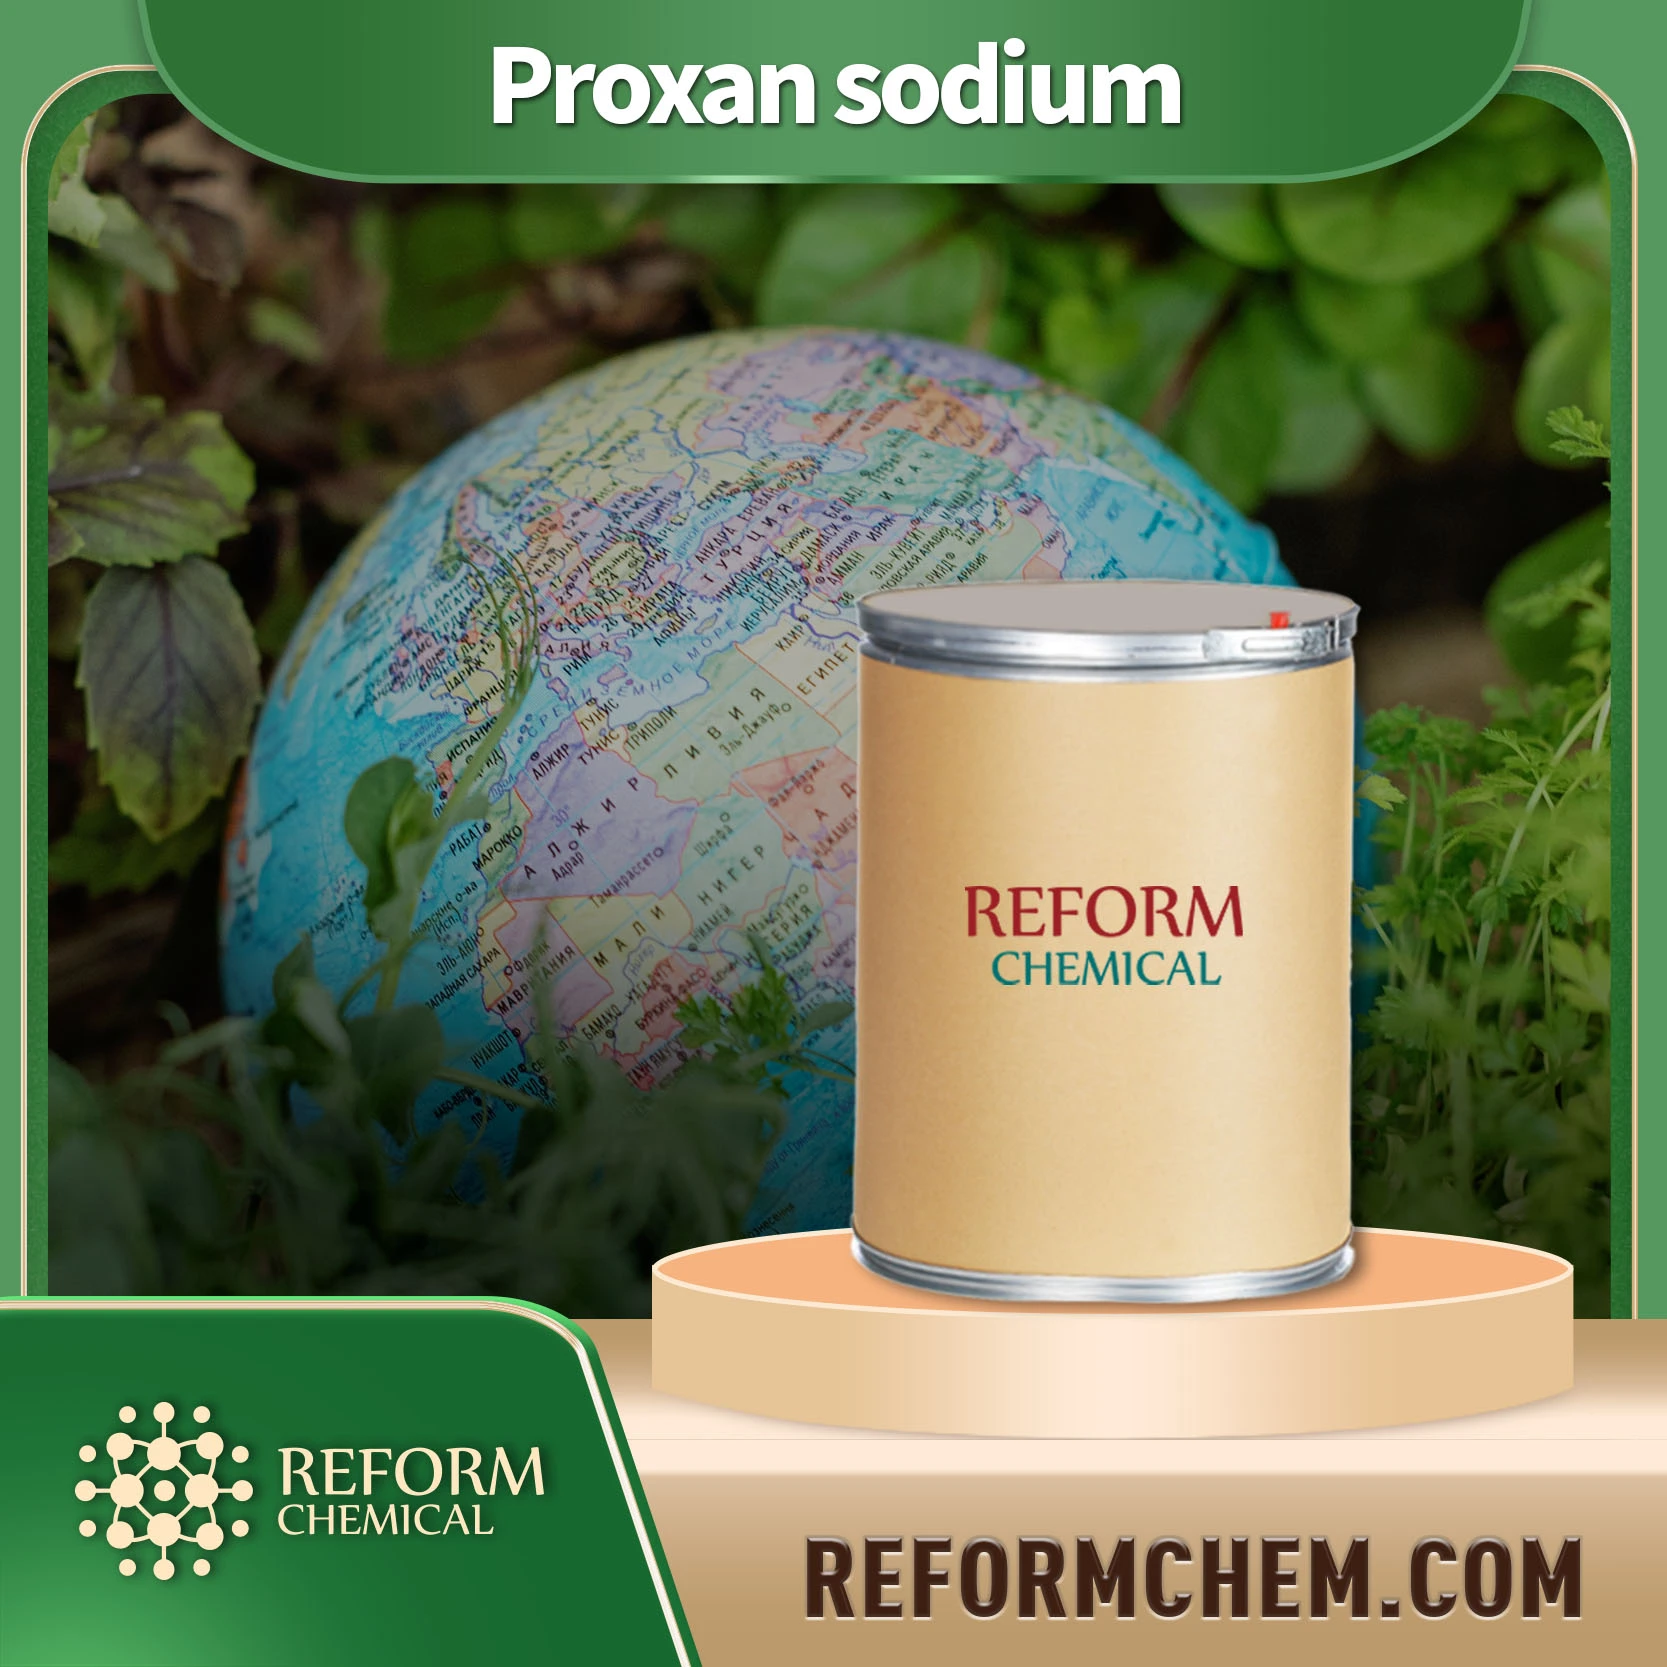 Proxan sodium